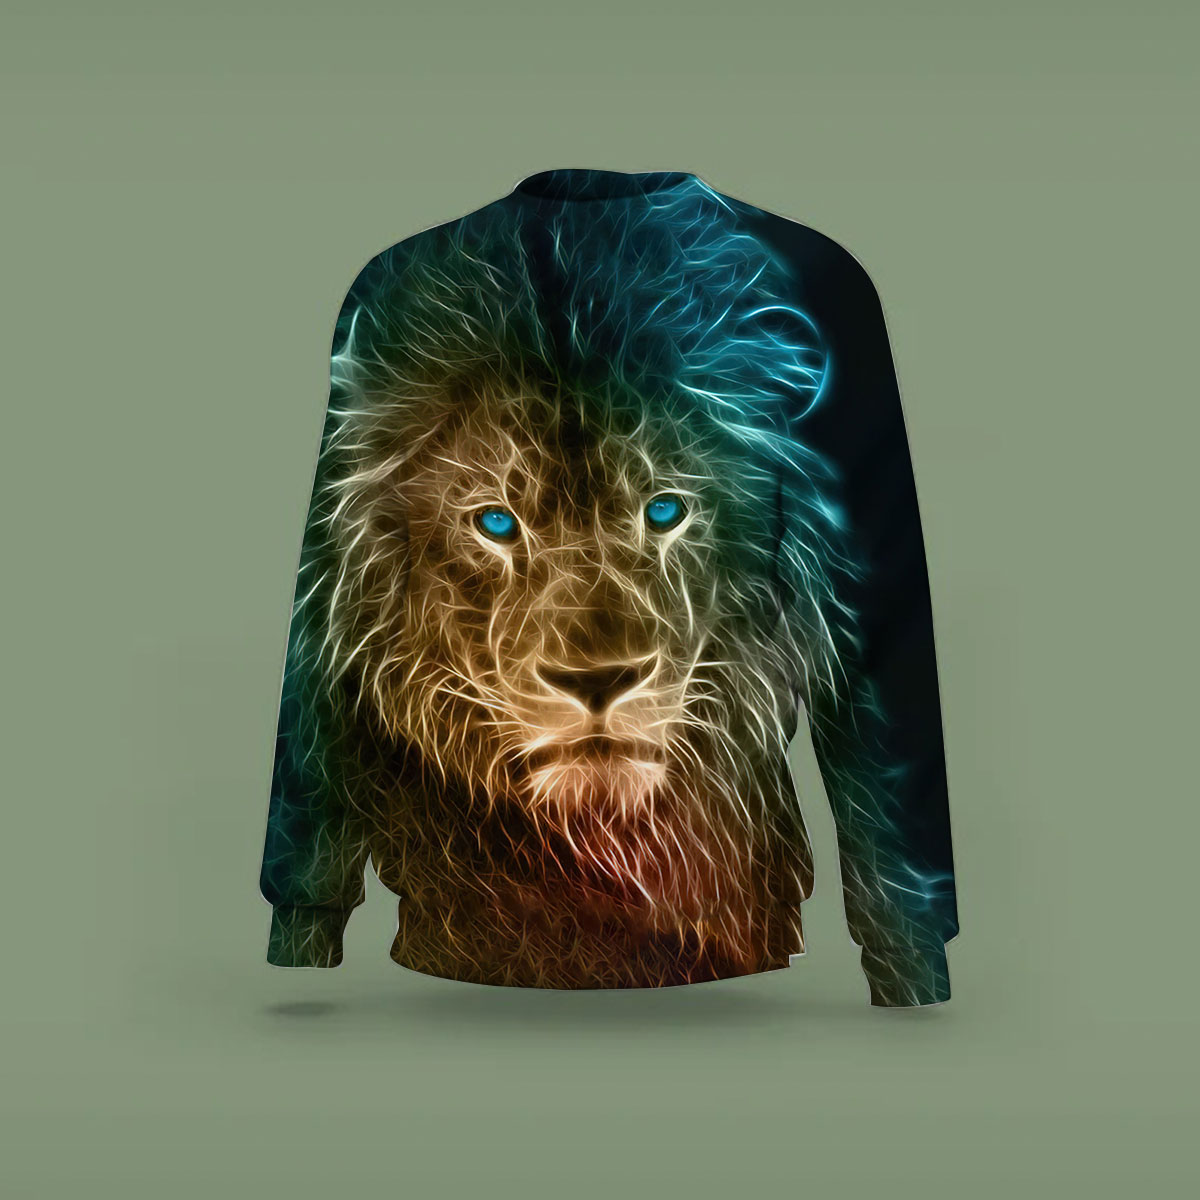 Black Lion Sweatshirt